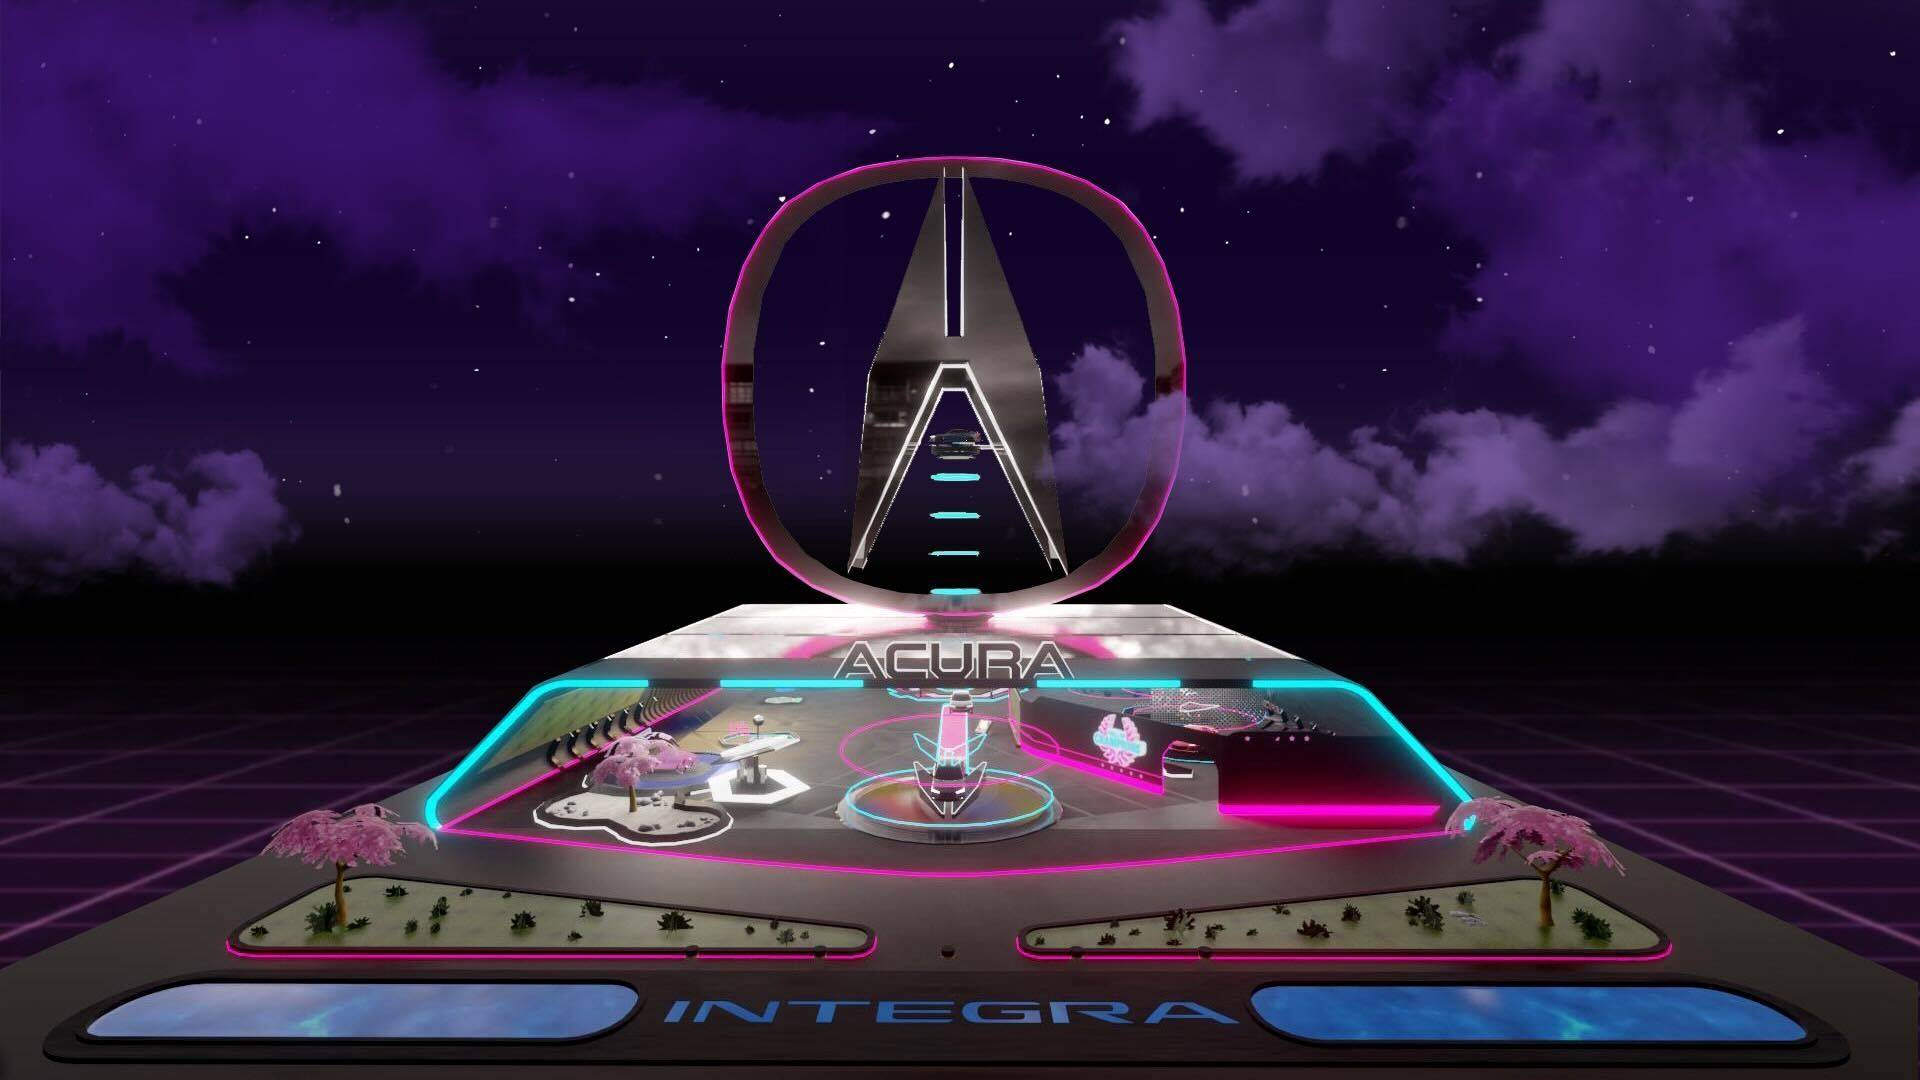 Acura of Decentraland Teaser Image.jpg